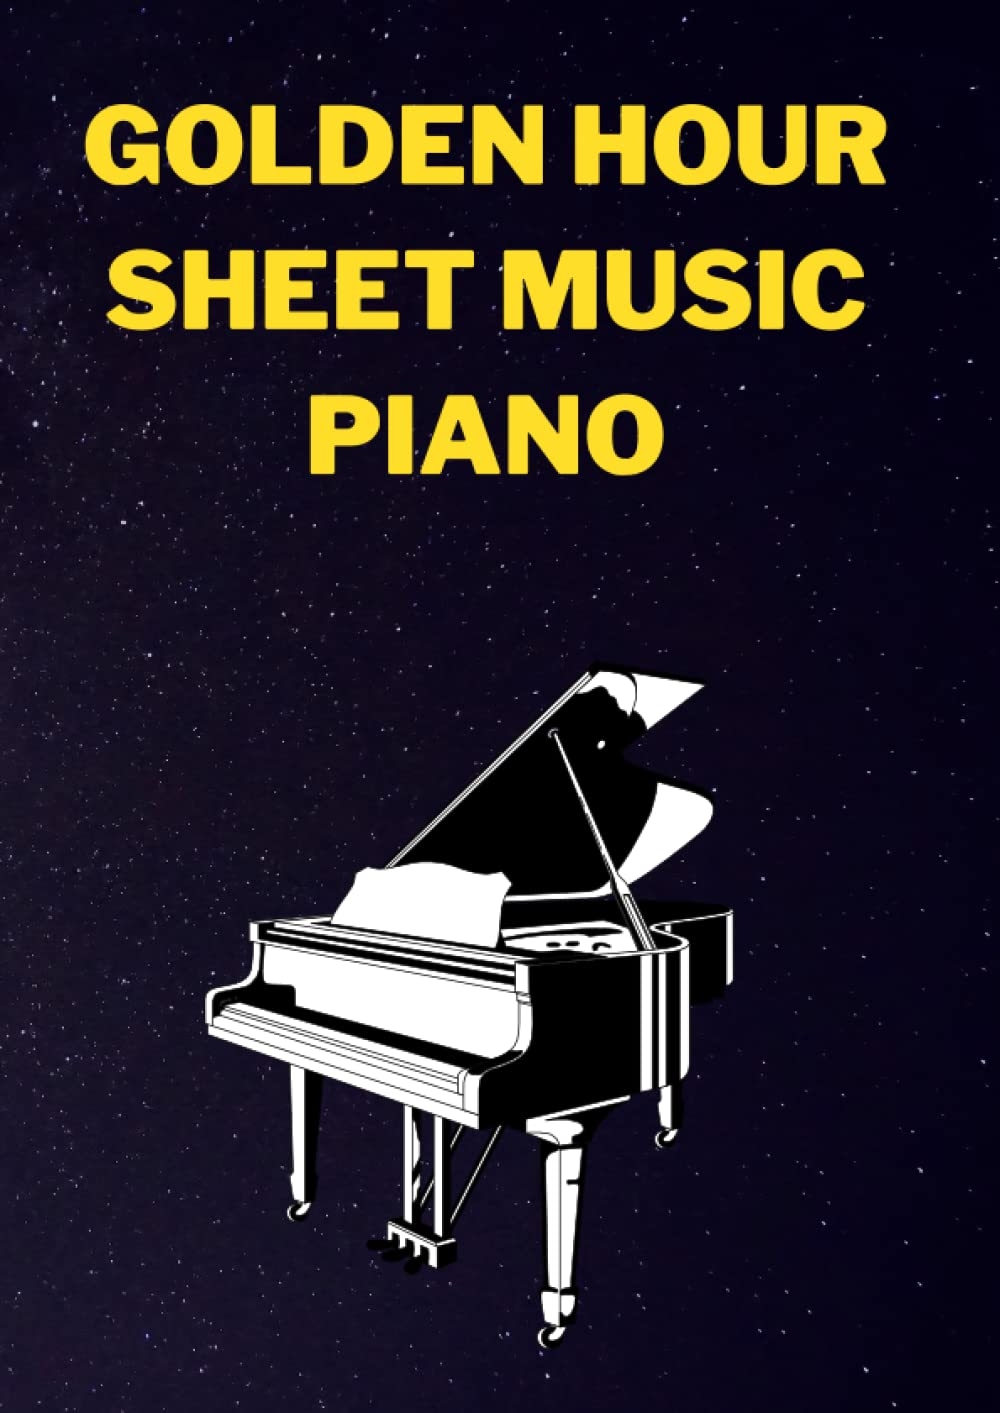 Golden Hour sheet music piano: Selection of famous songs   price checker   price checker Description Gallery Reviews